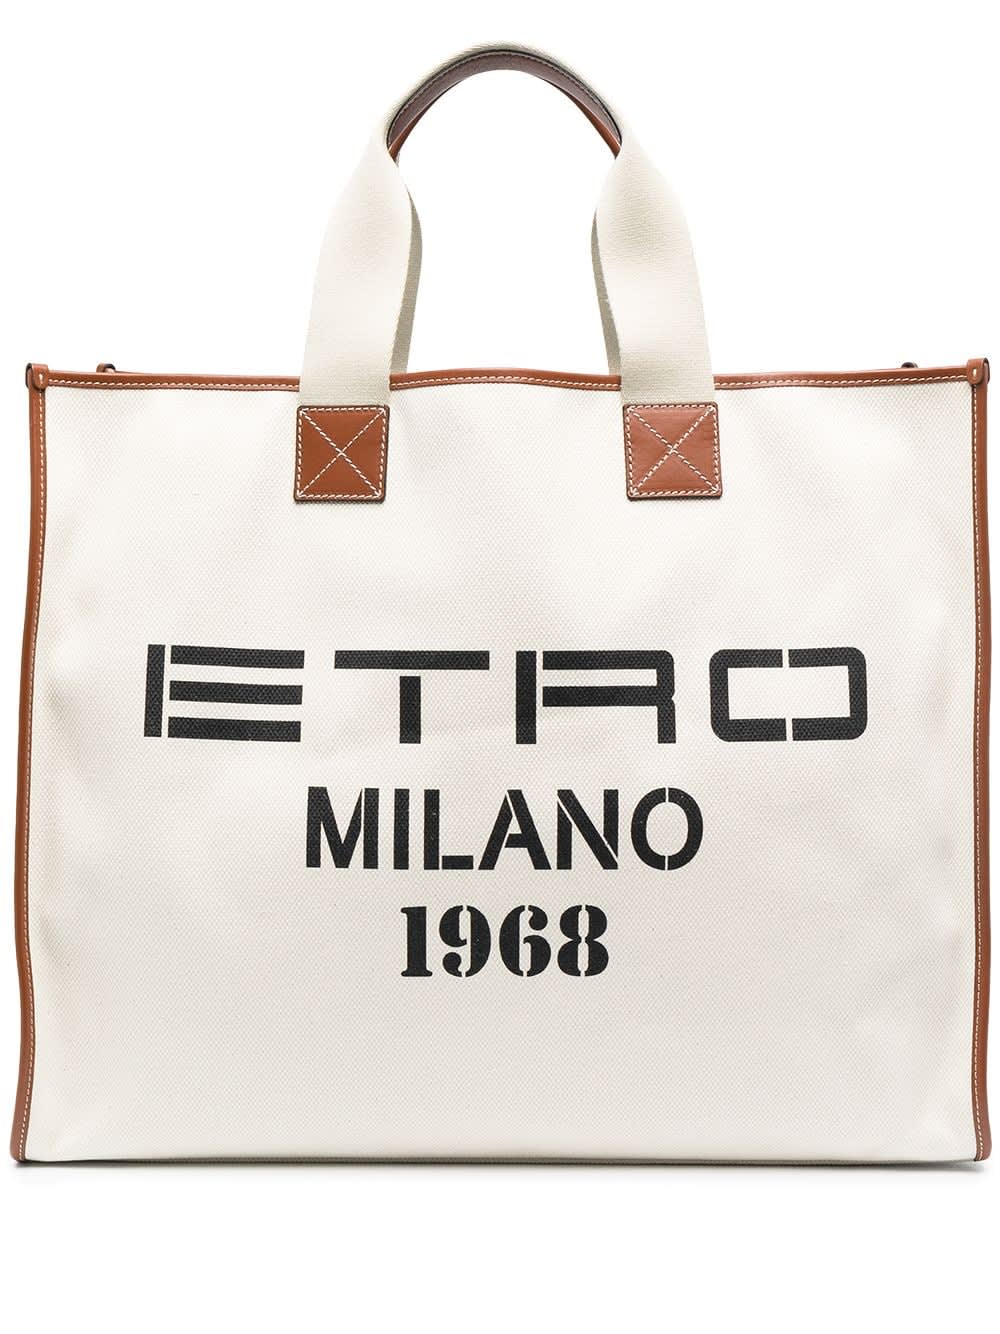 ETRO ETRO MILANO 1968 SHOPPING BAG IN CANVAS,1N369-8895 992